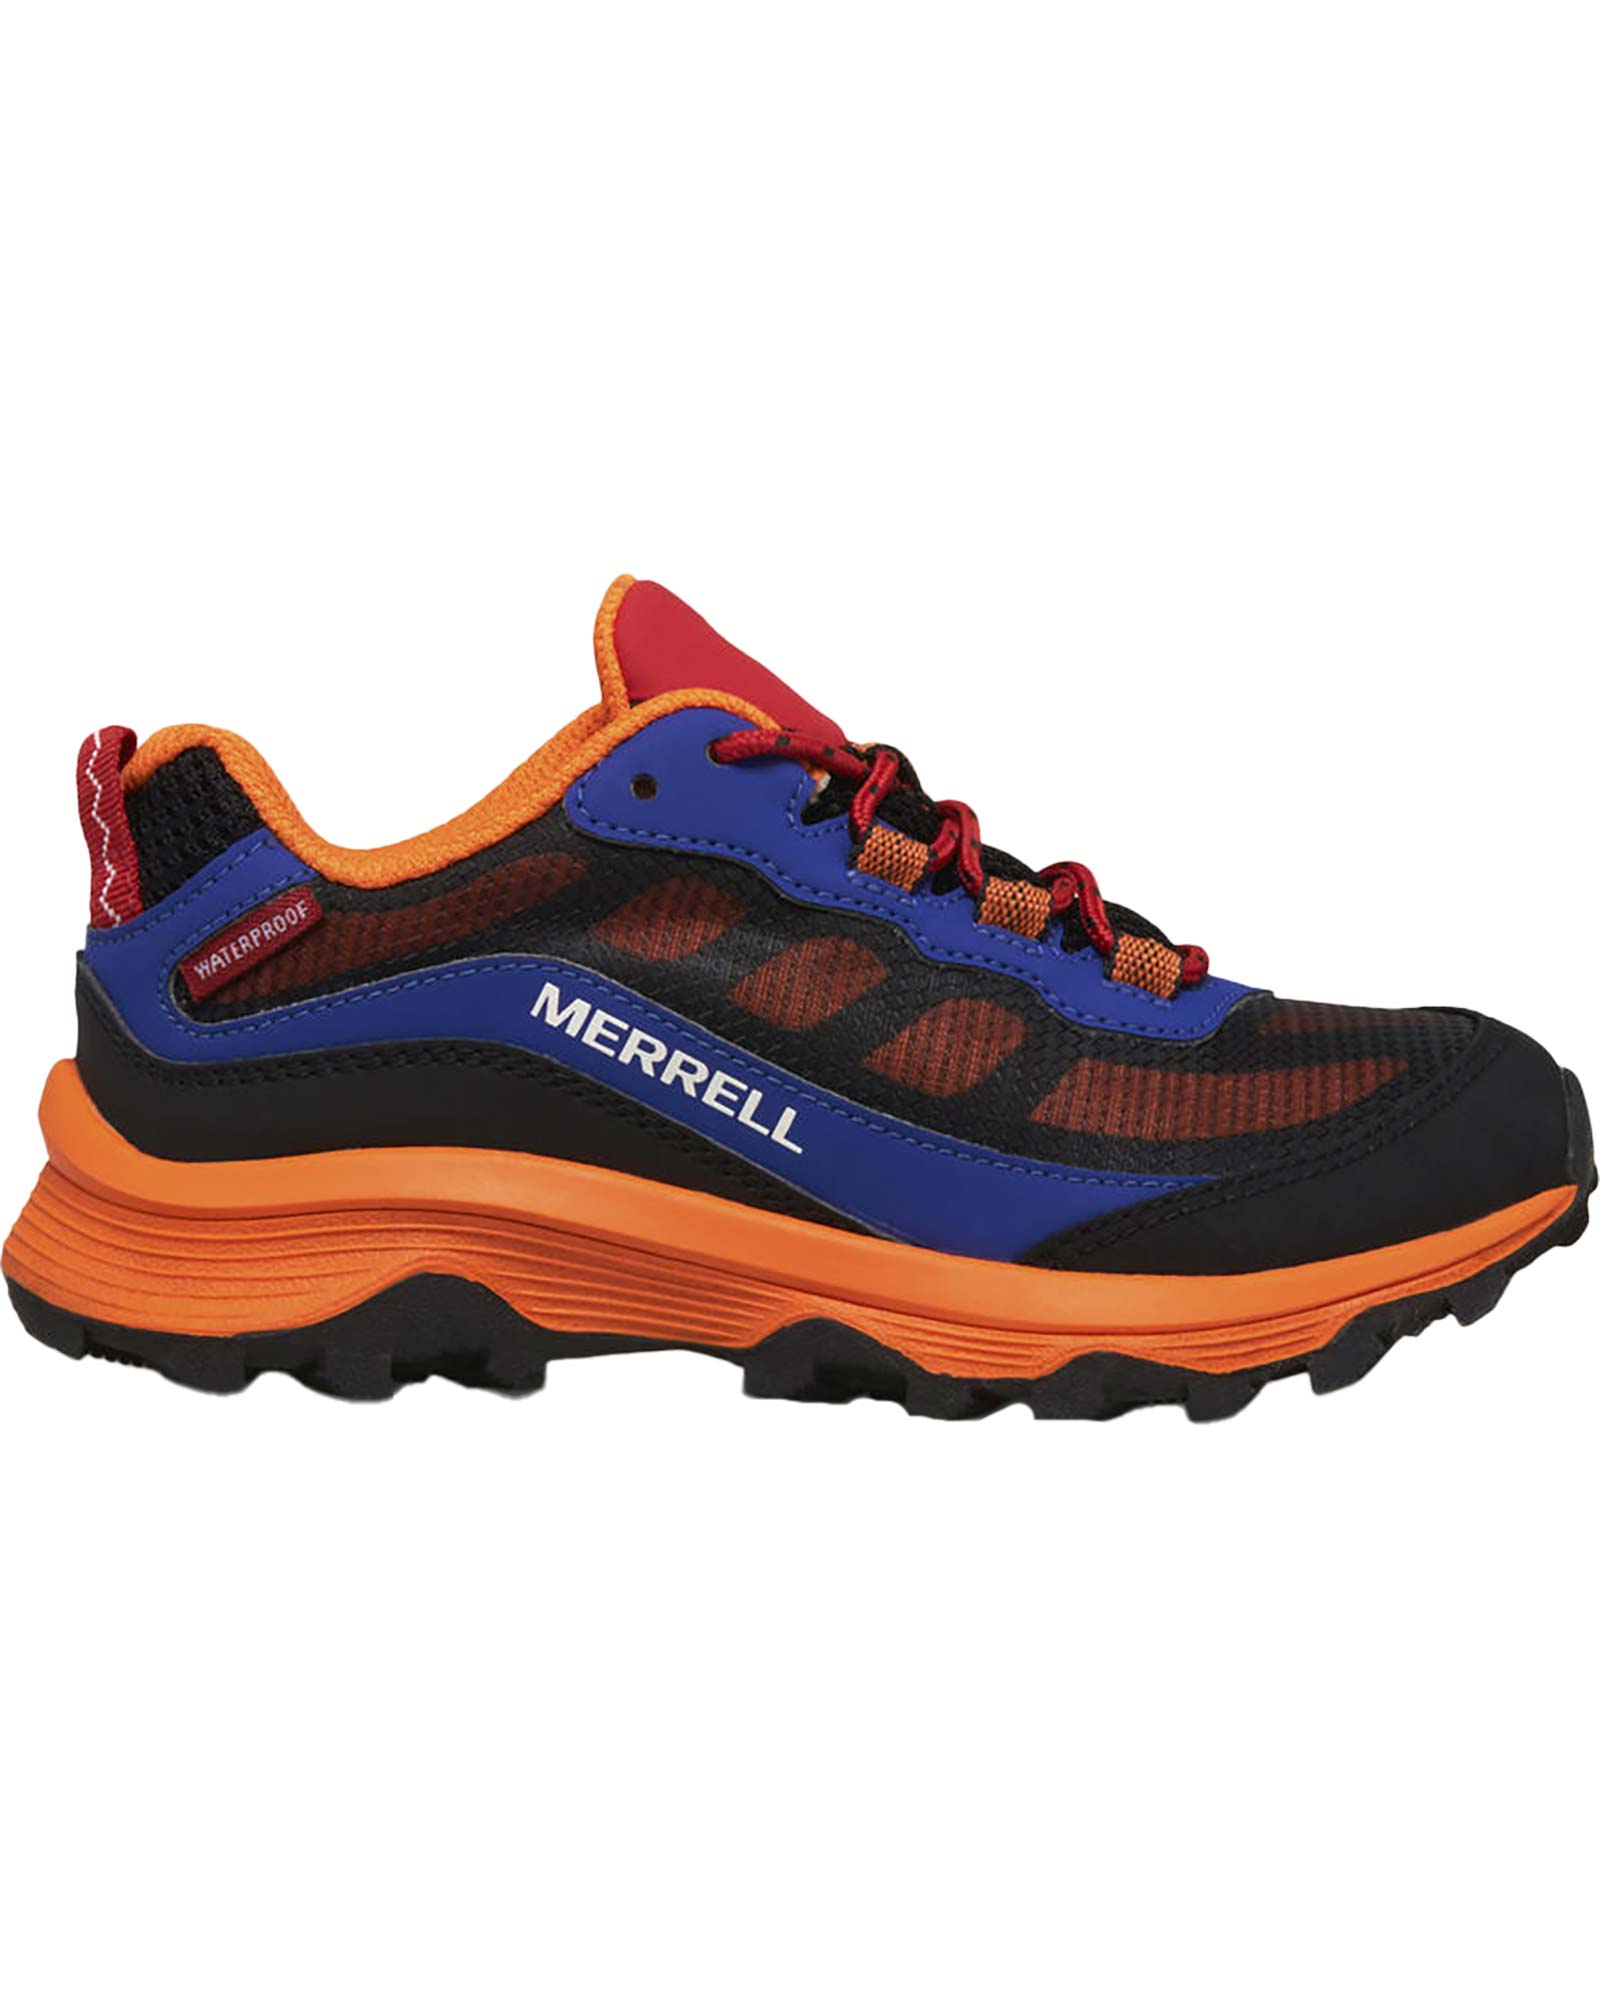 Merrell Moab Speed Laces Kids’ Waterproof Shoes - Blue/Black/Orange UK 3